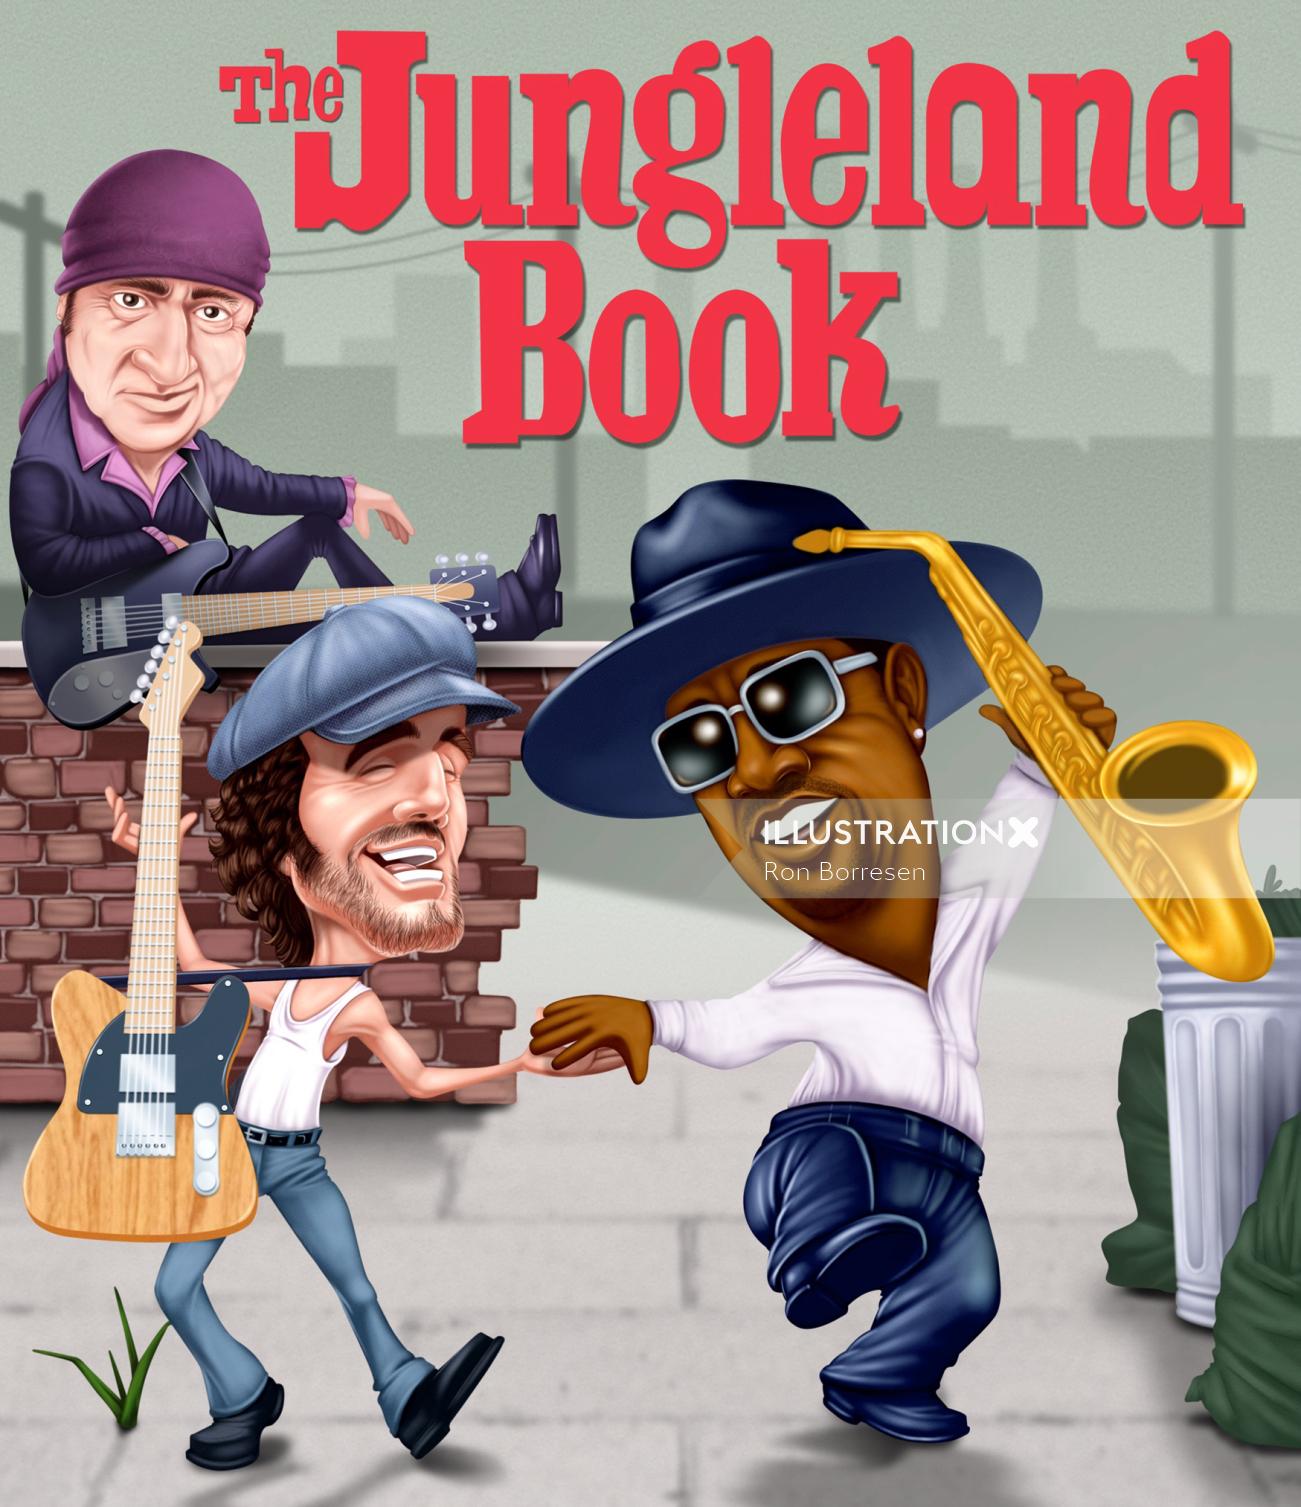 "The Jungle Land" Book cover design